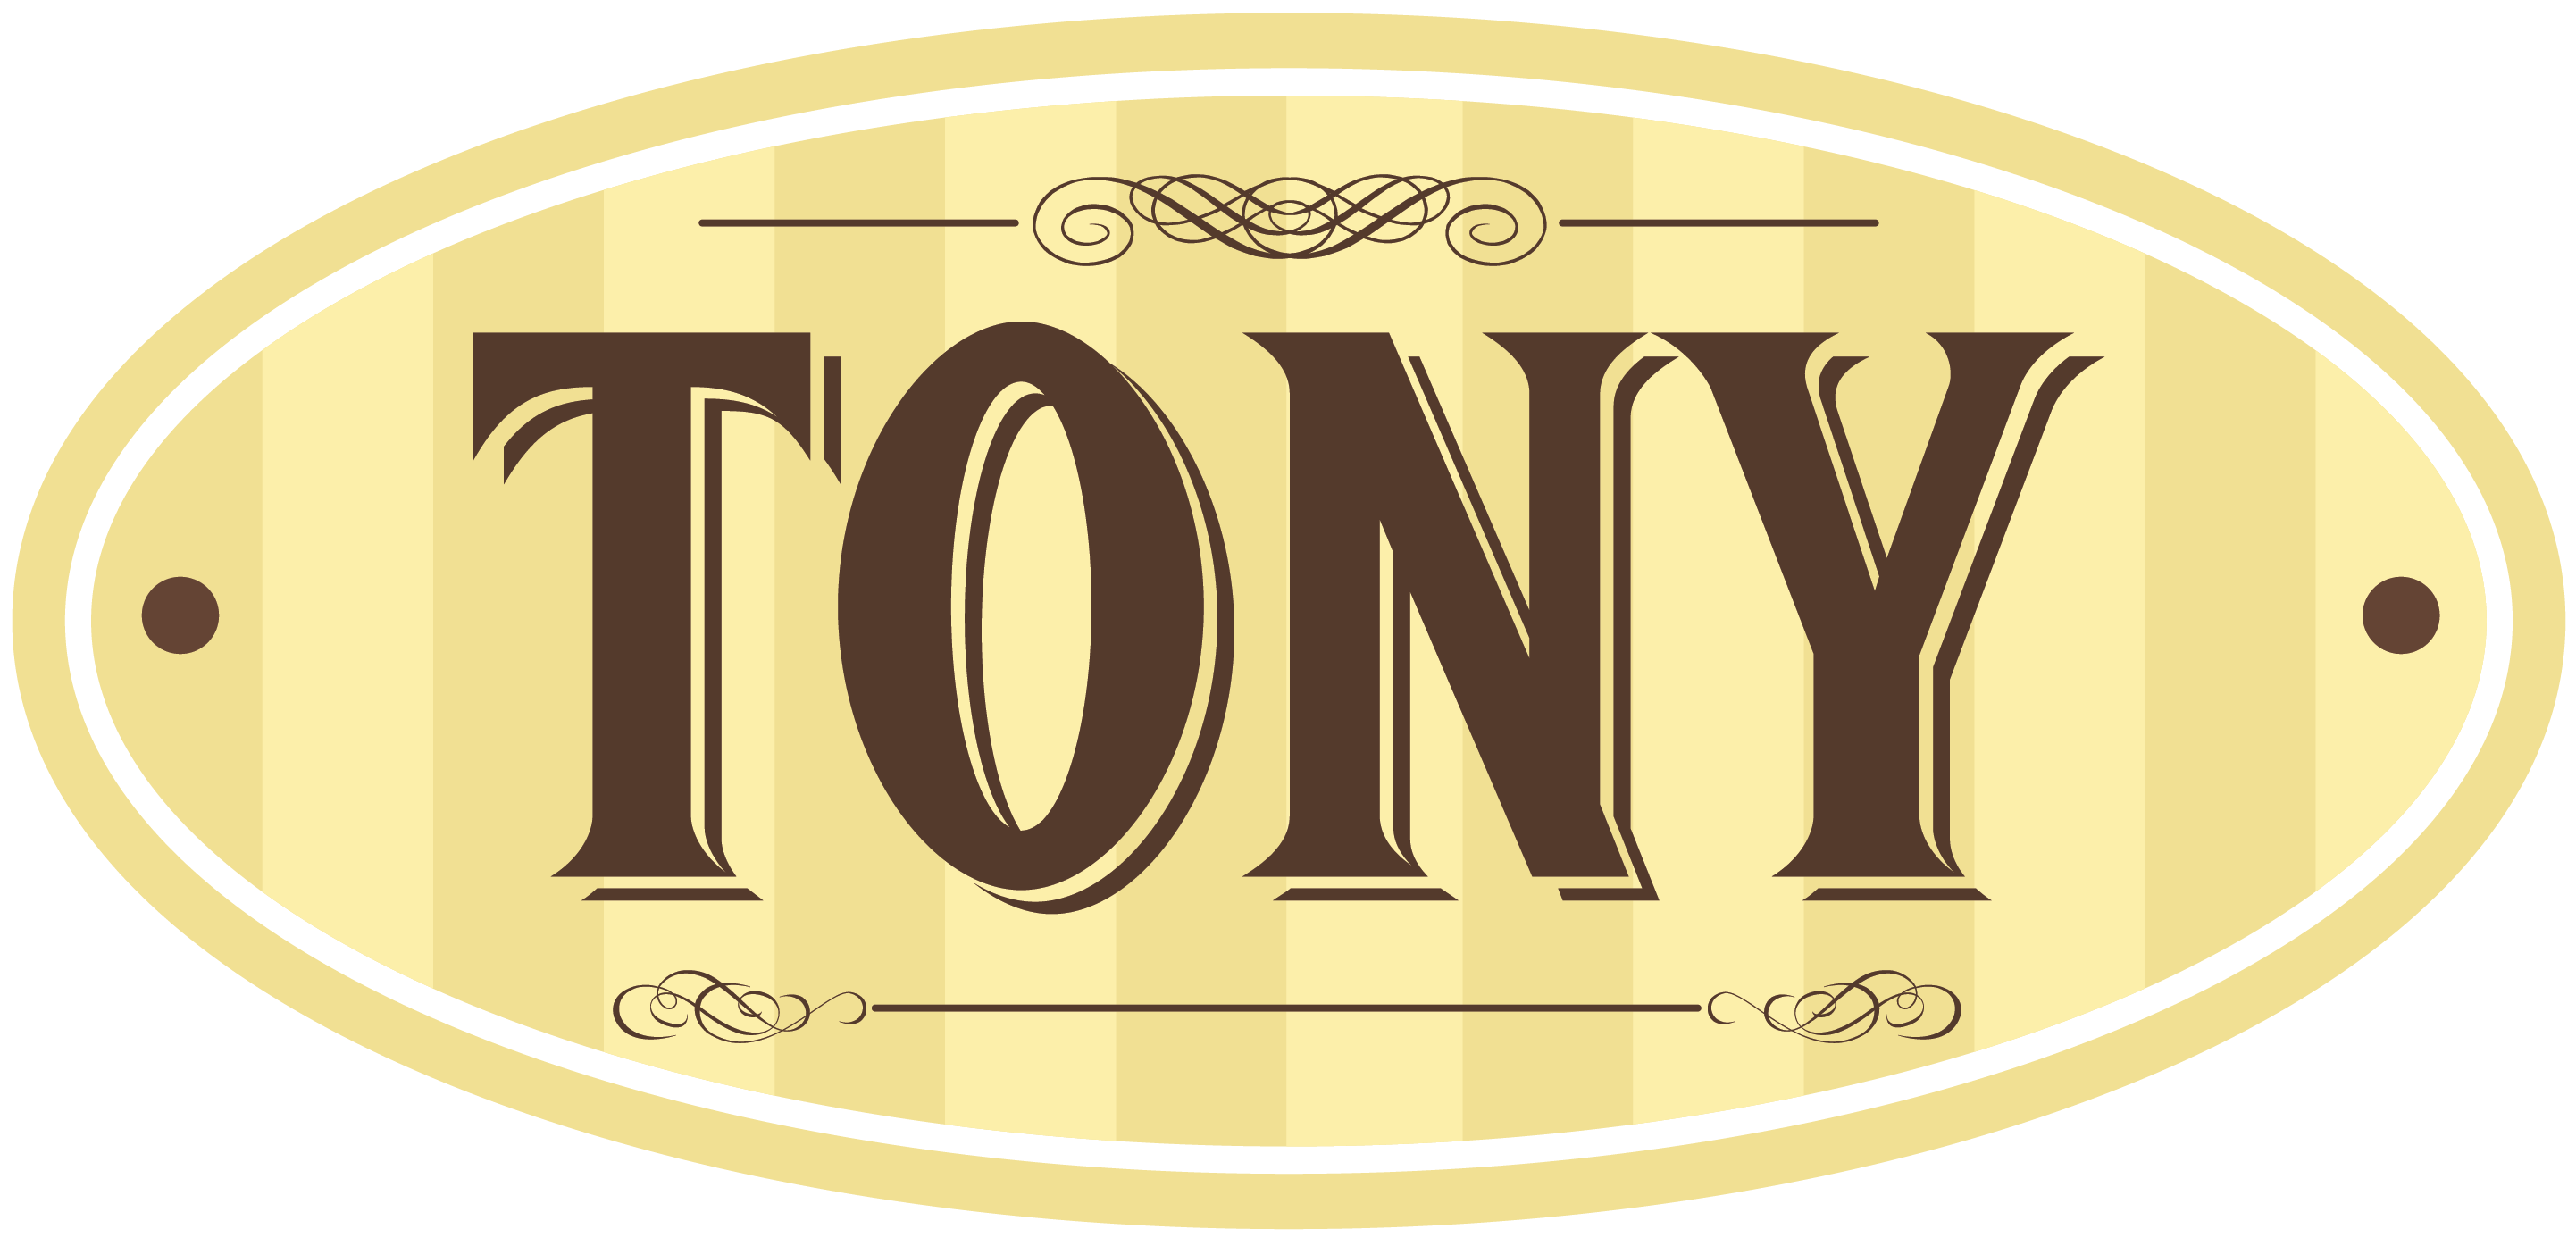 TONY Ristorante